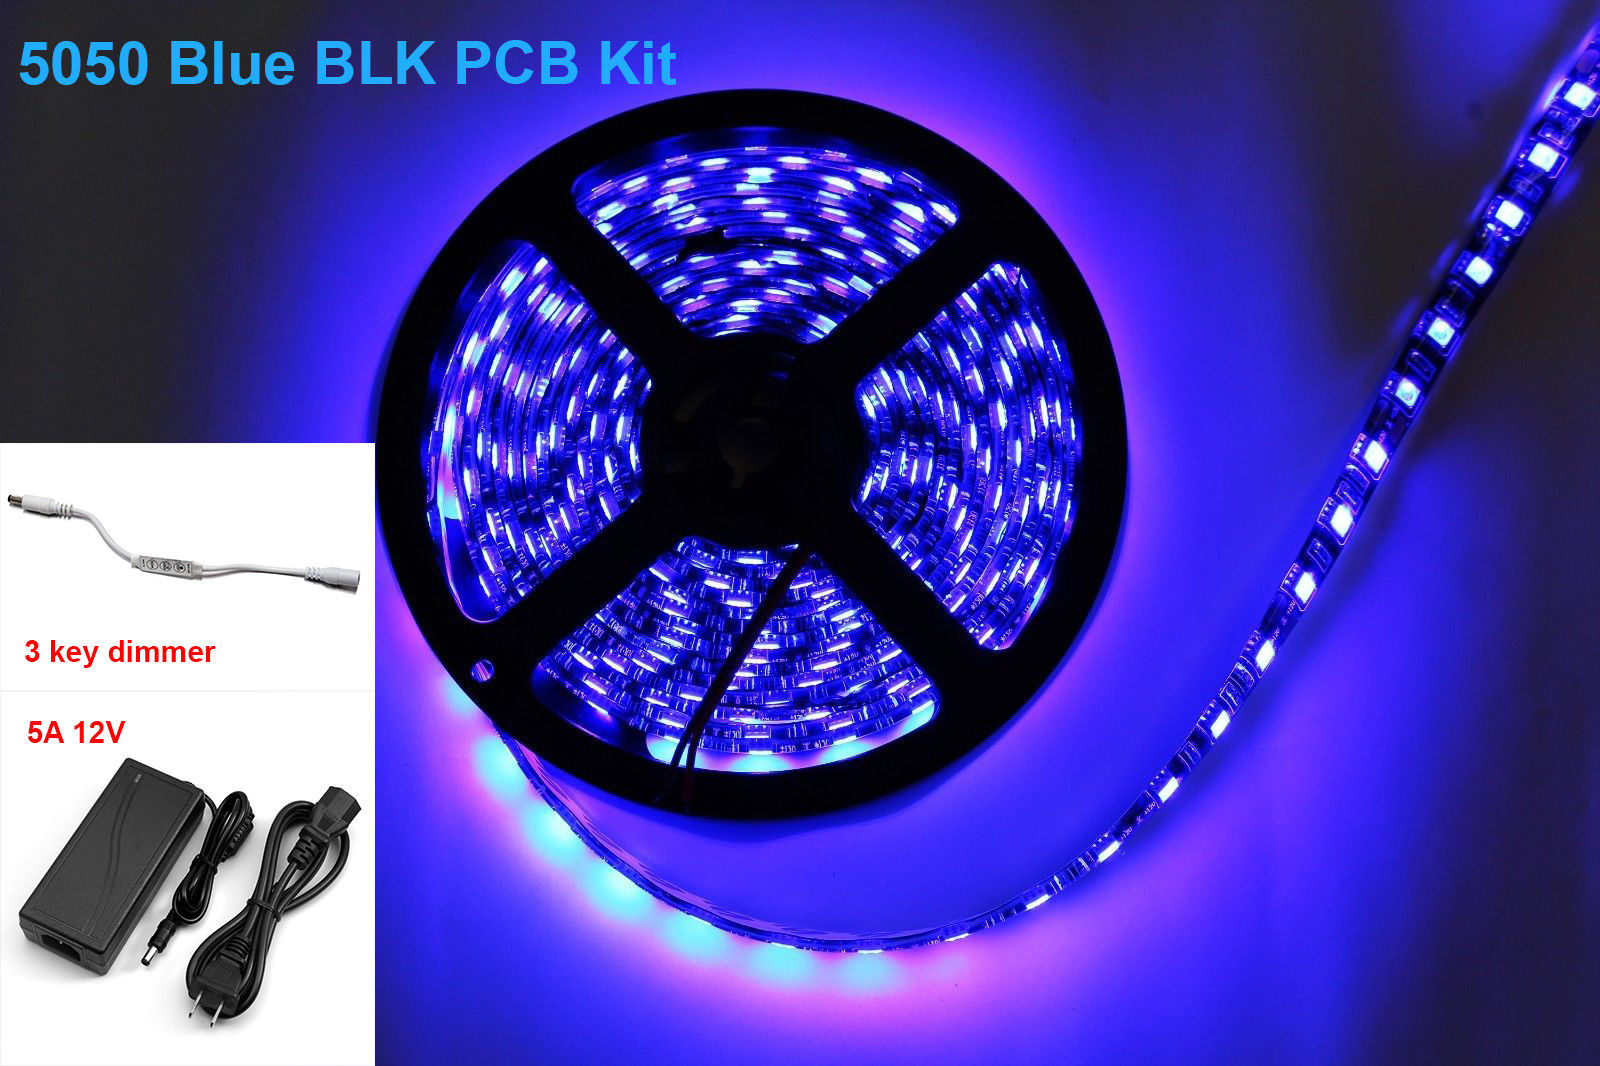 Blue 5M 300Led 5050 SMD Waterproof LED Strip Light Black PCB+Dimmer+12V/5A Power